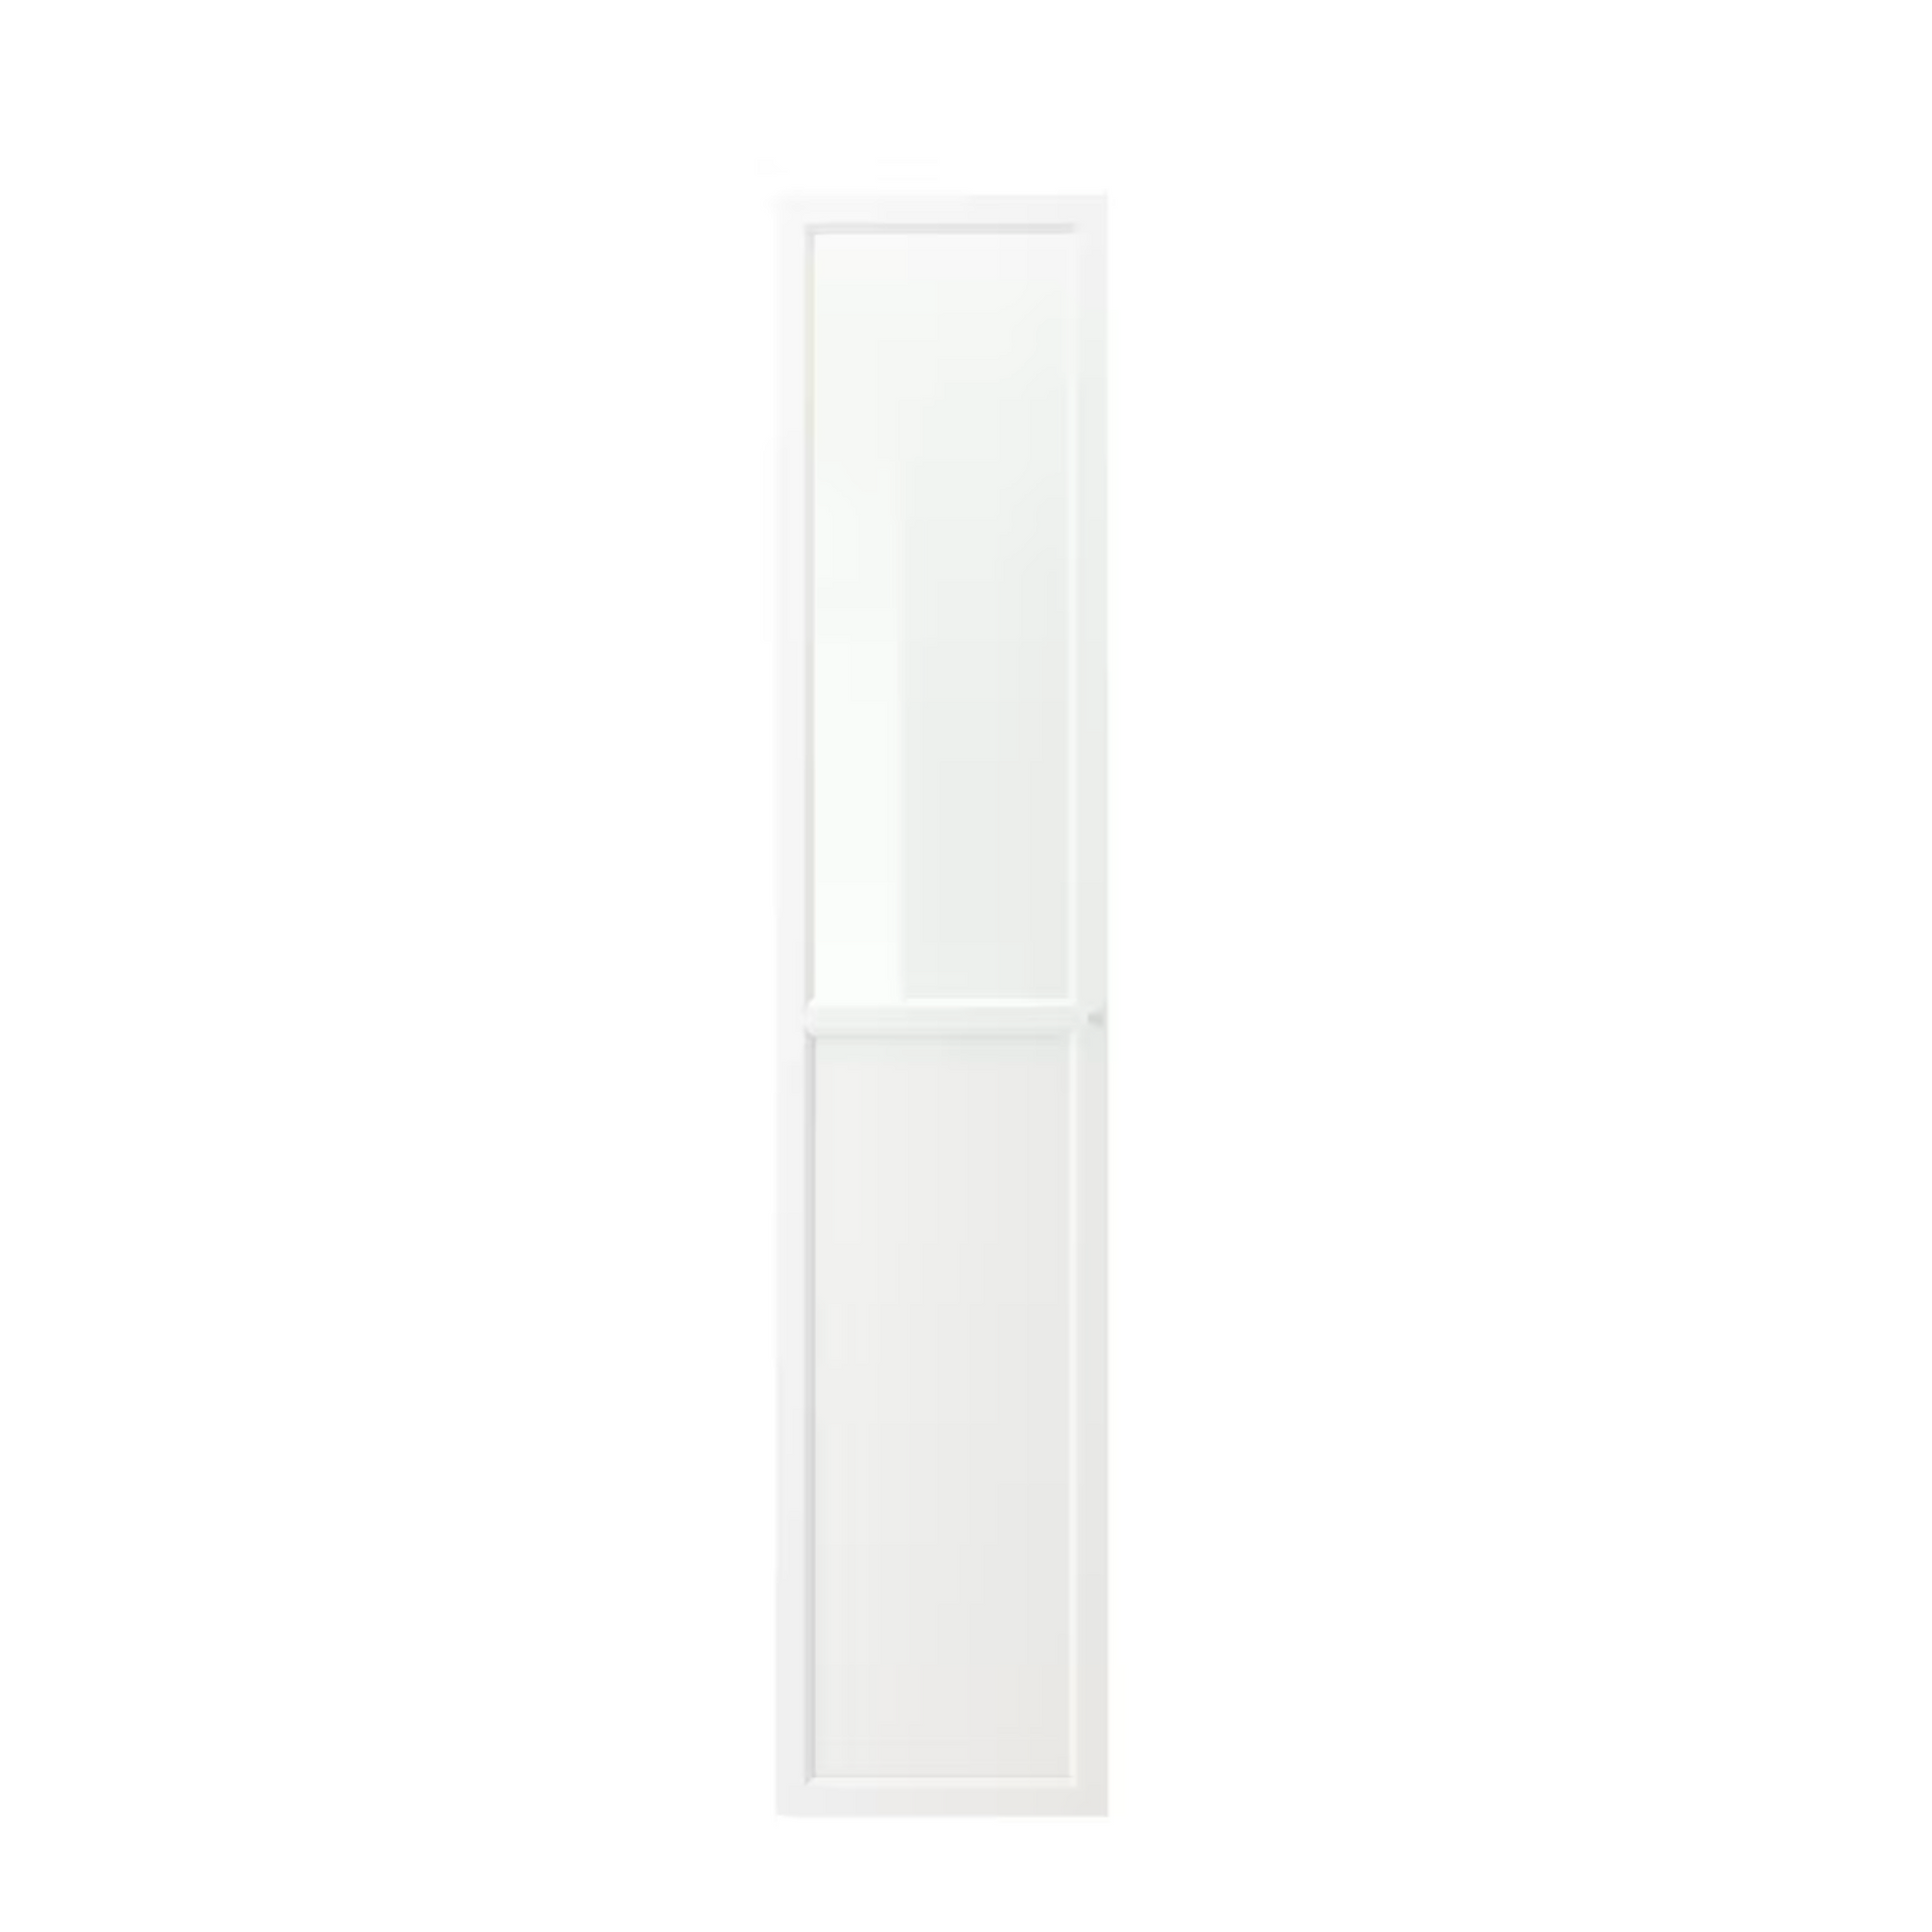 IKEA Billy/Oxberg Half Glass Door 40x192cm, White (6541175193665)